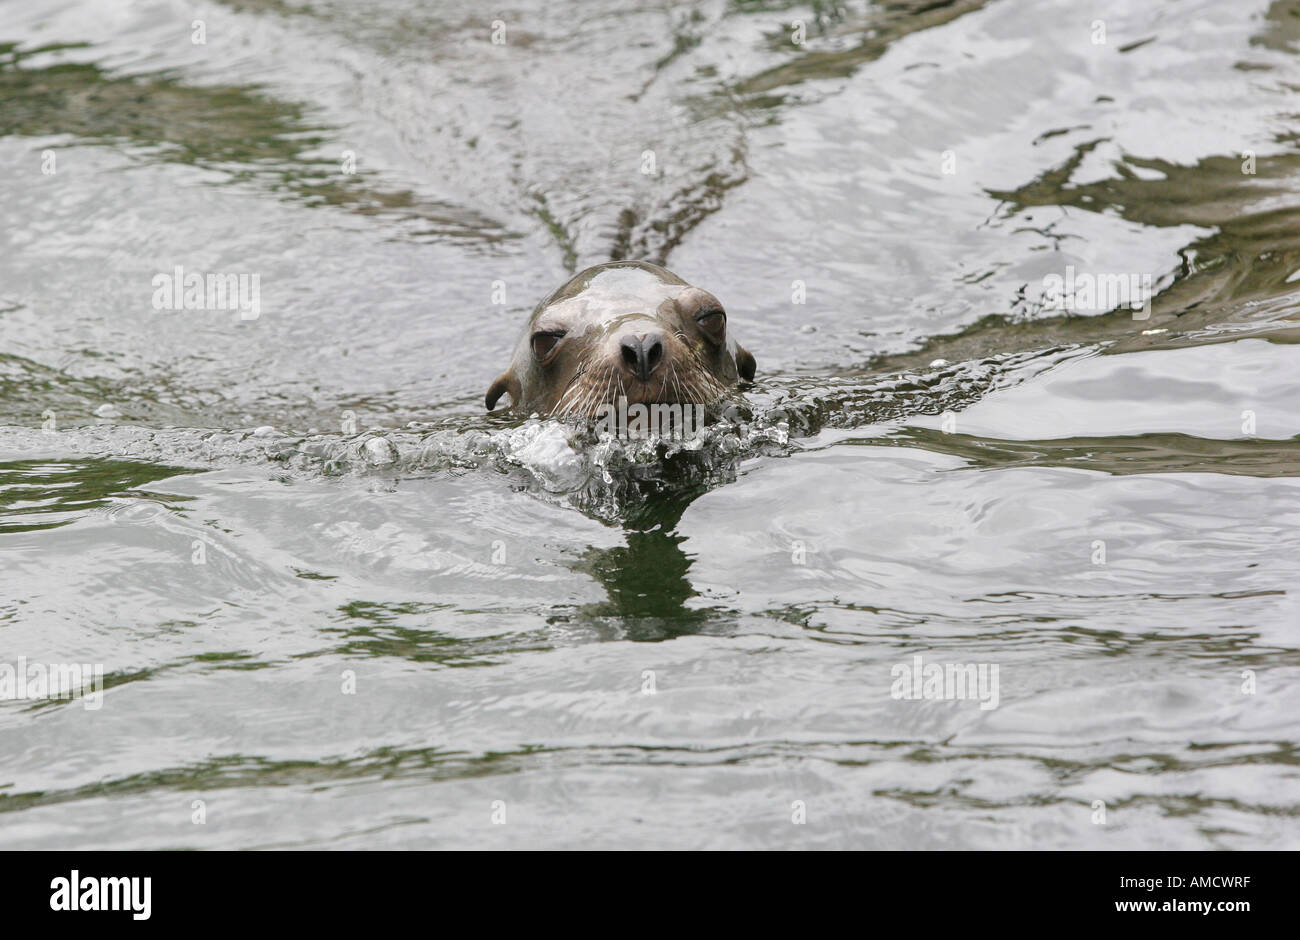 California Sea Lion swimming in water Stock Photo